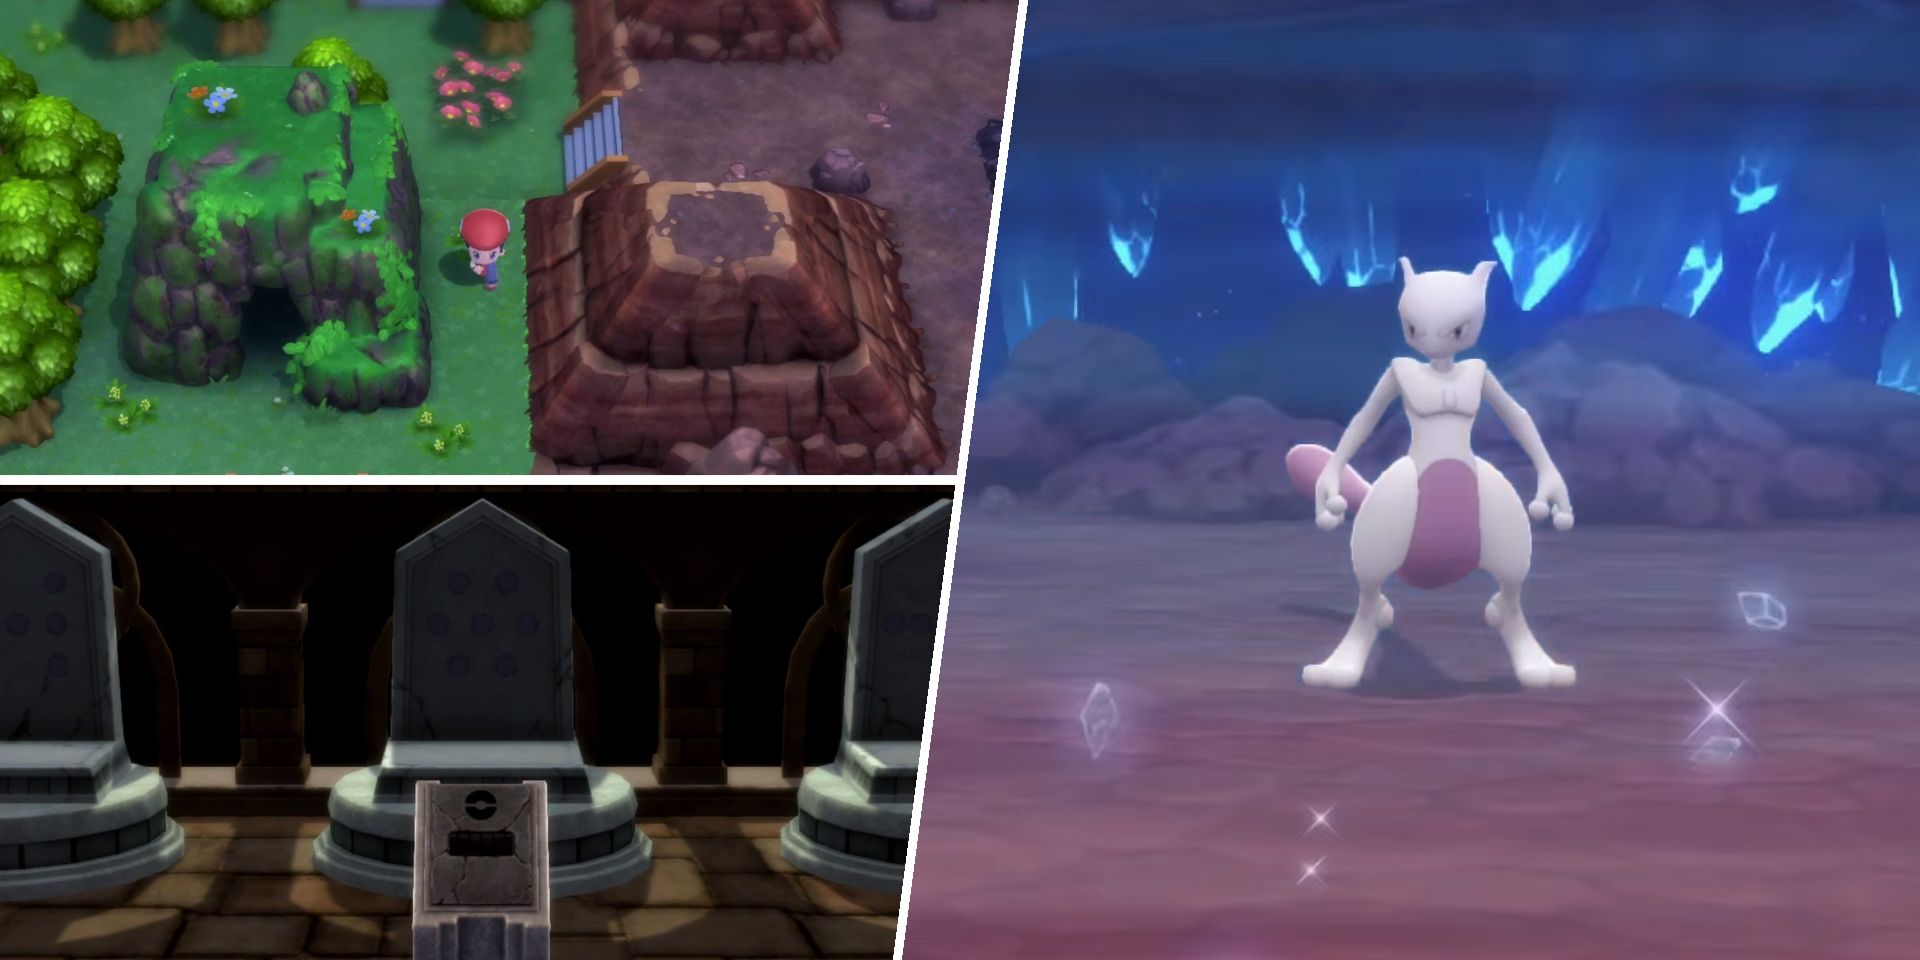 Pokémon Brilliant Diamond and Shining Pearl walkthrough